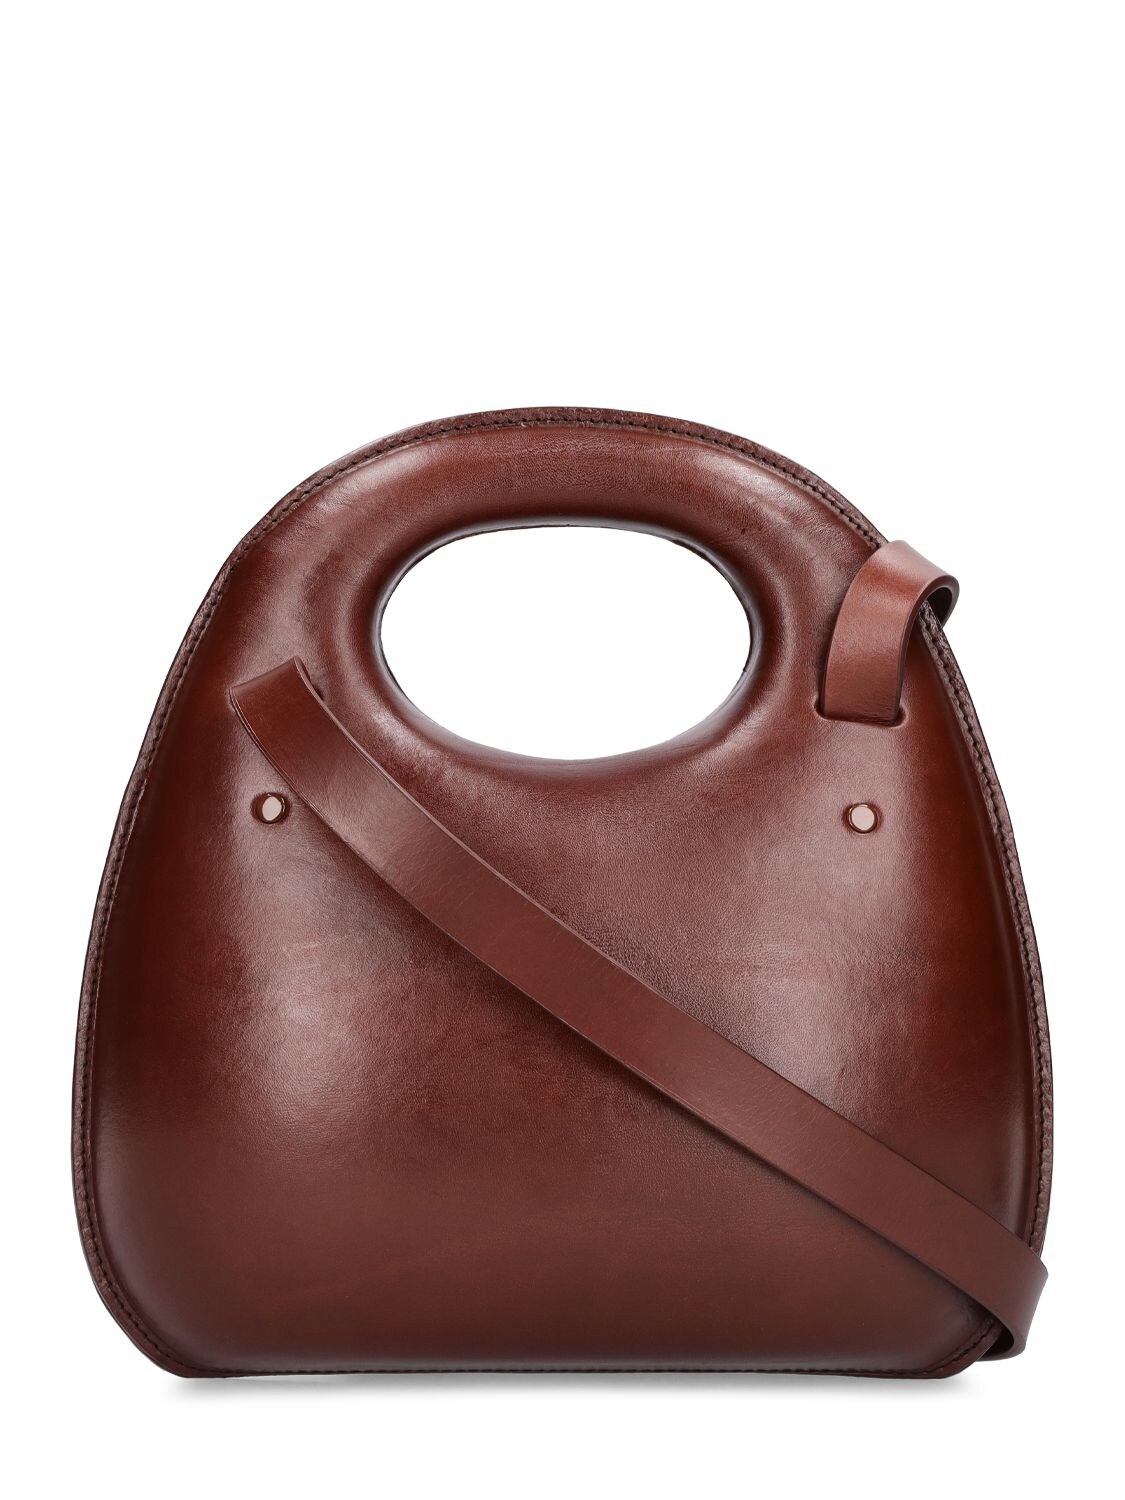 Lemaire Egg Leather Shoulder Bag In Chocolate Fondant | ModeSens